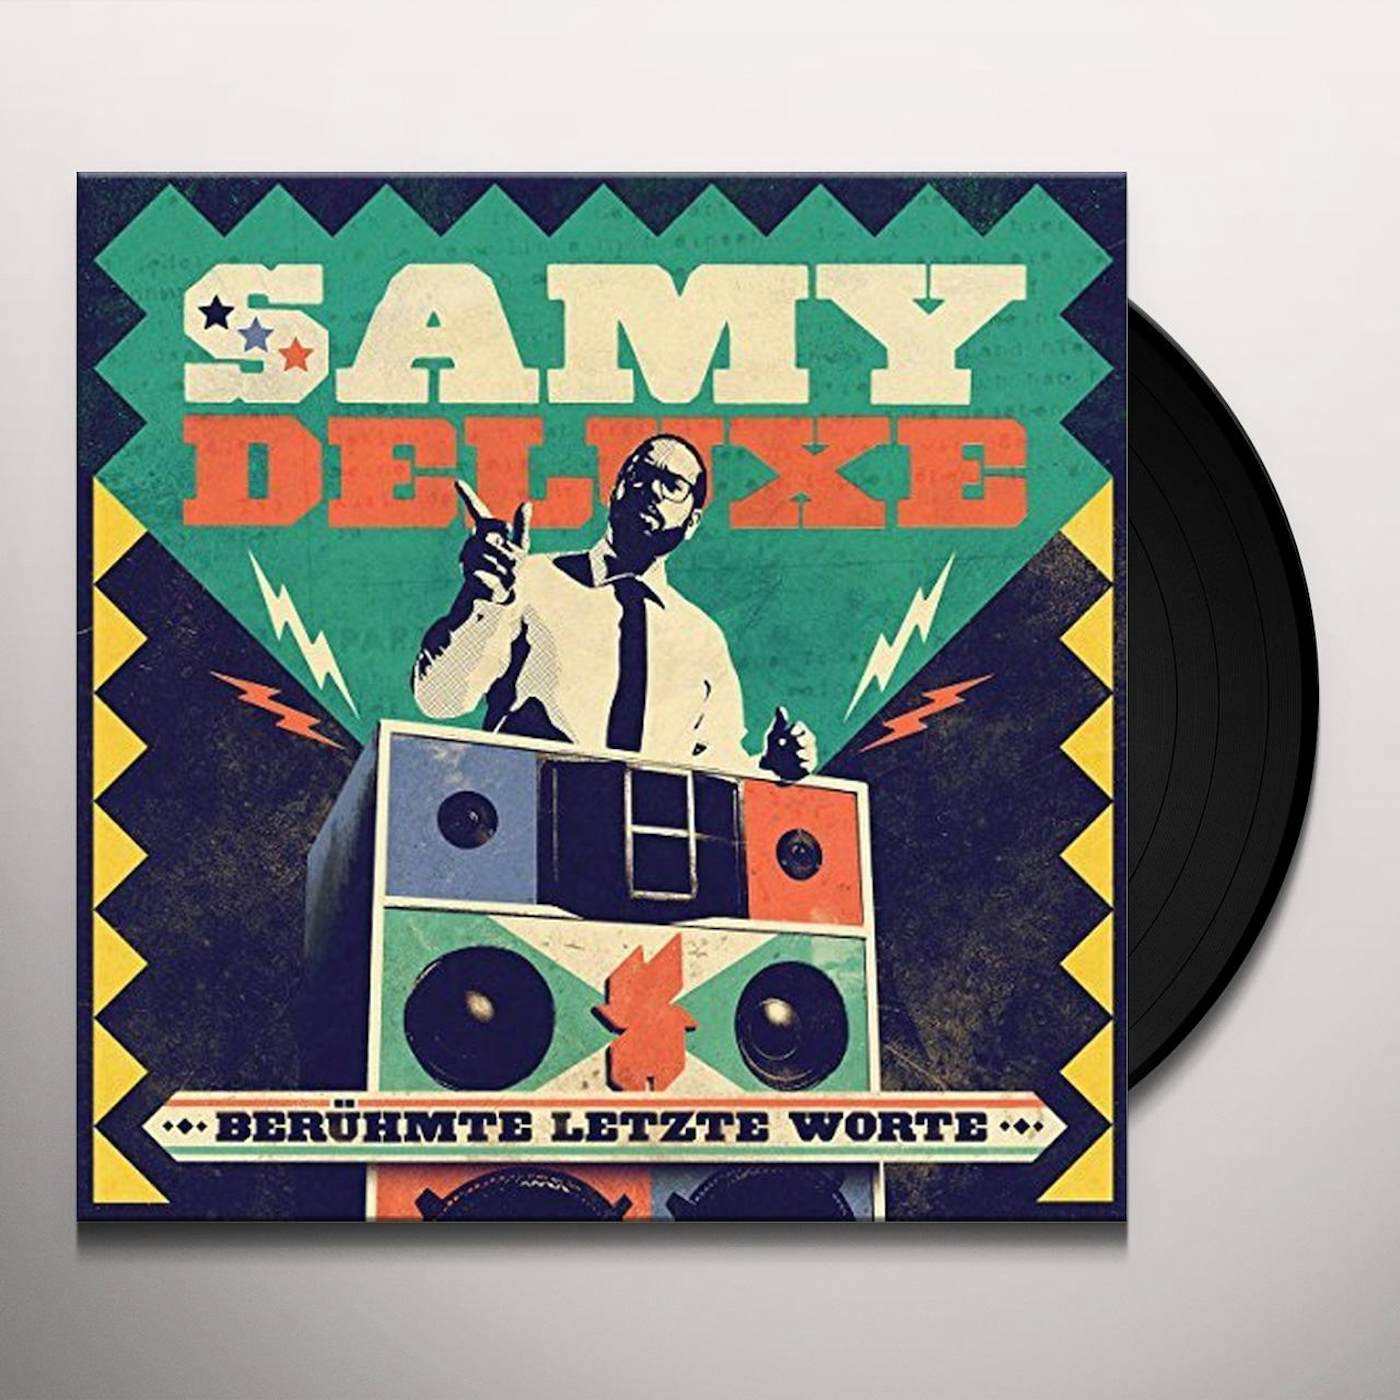 Samy Deluxe BERUEHMTE LETZTE WORTE Vinyl Record